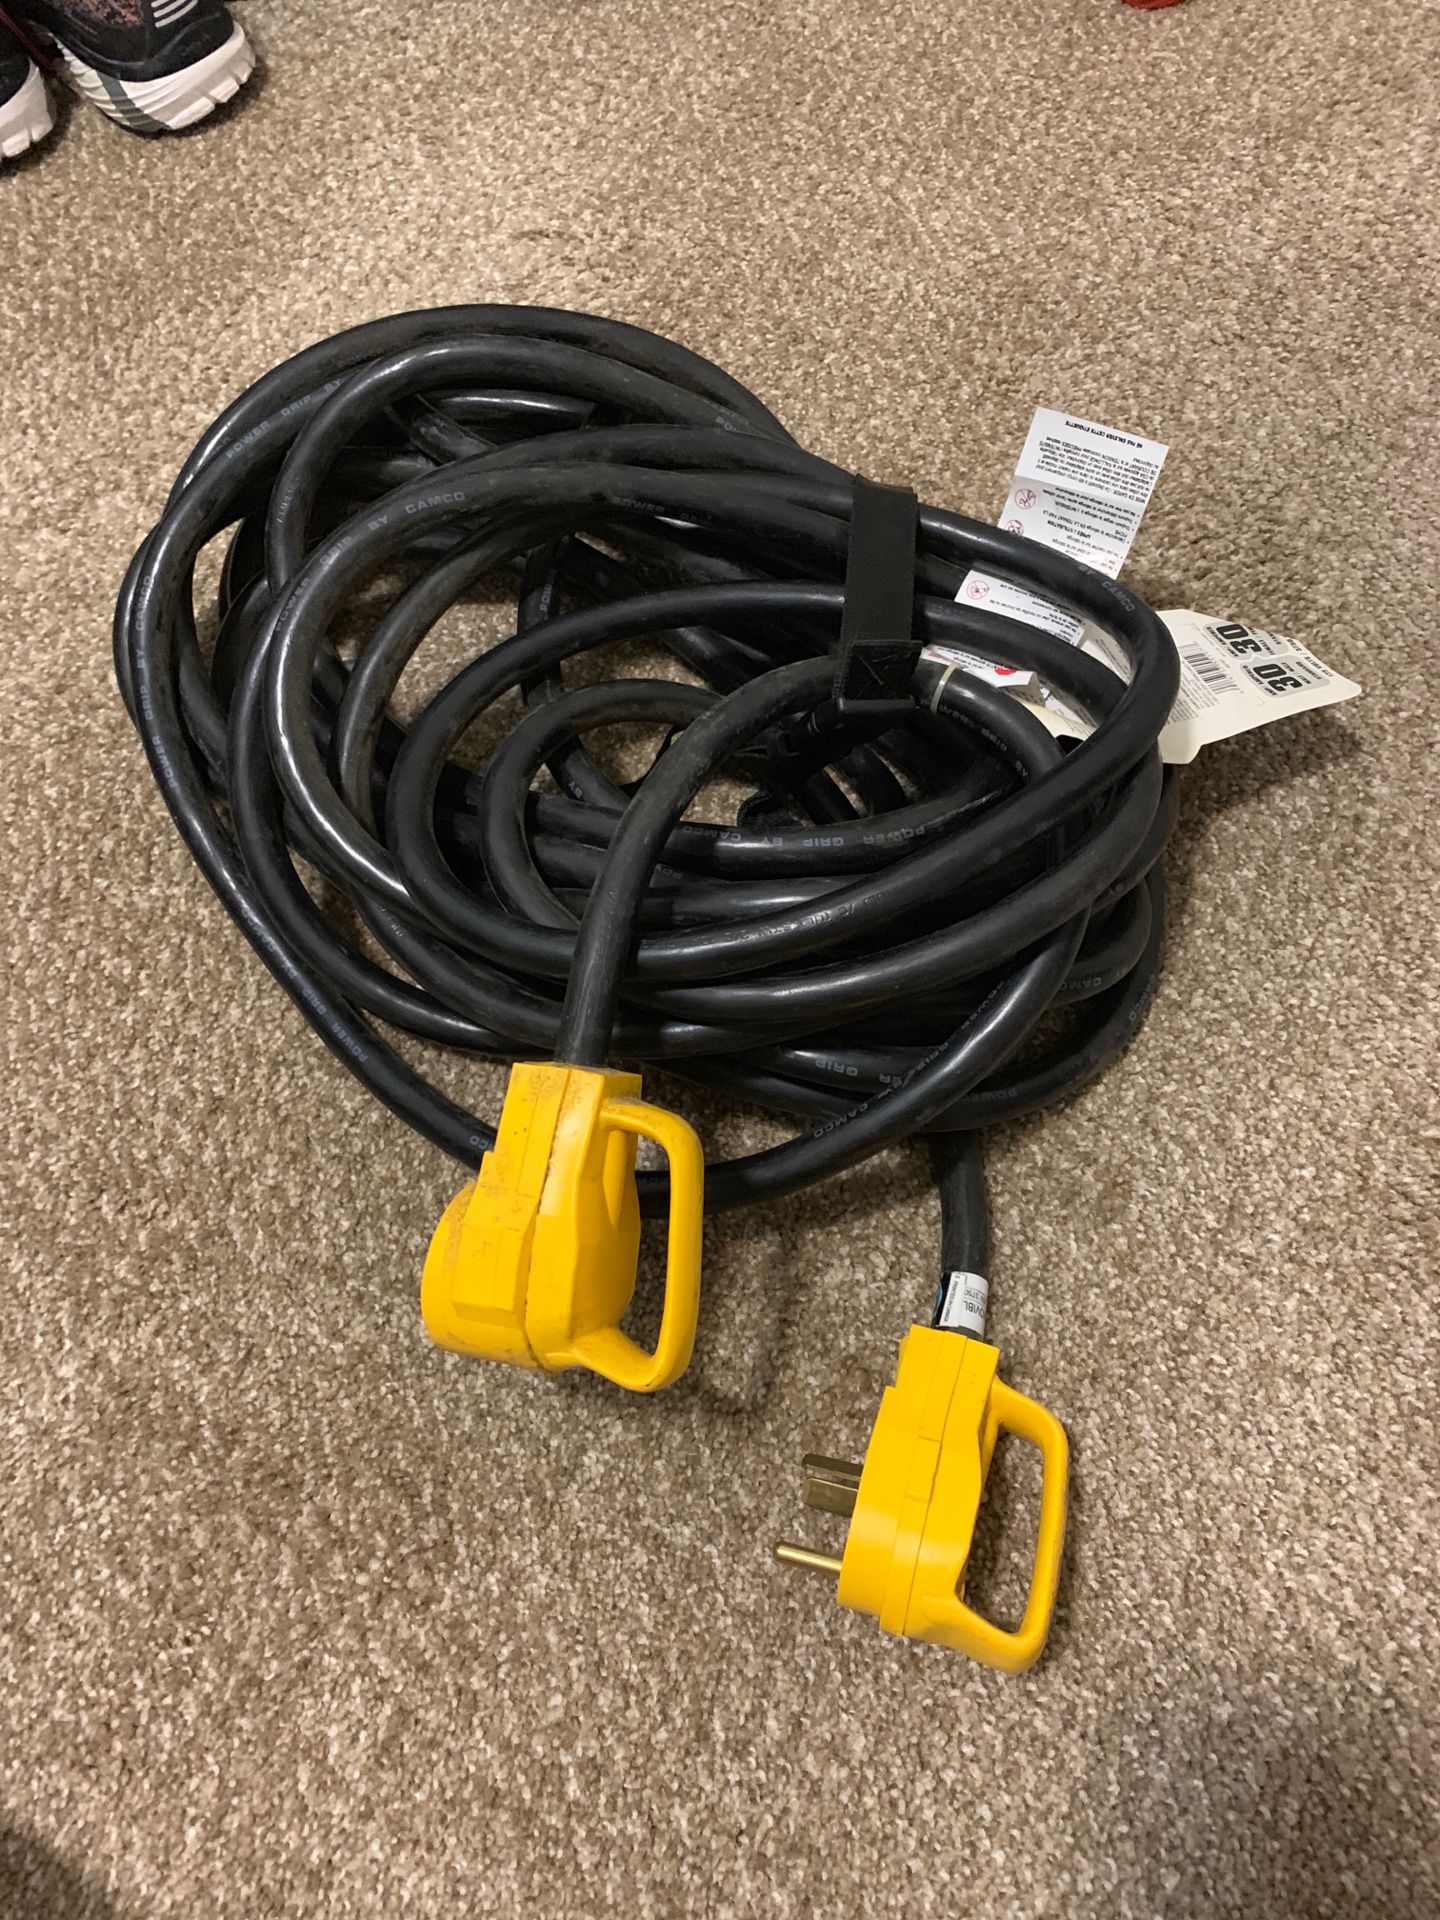 50’ RV extension cord